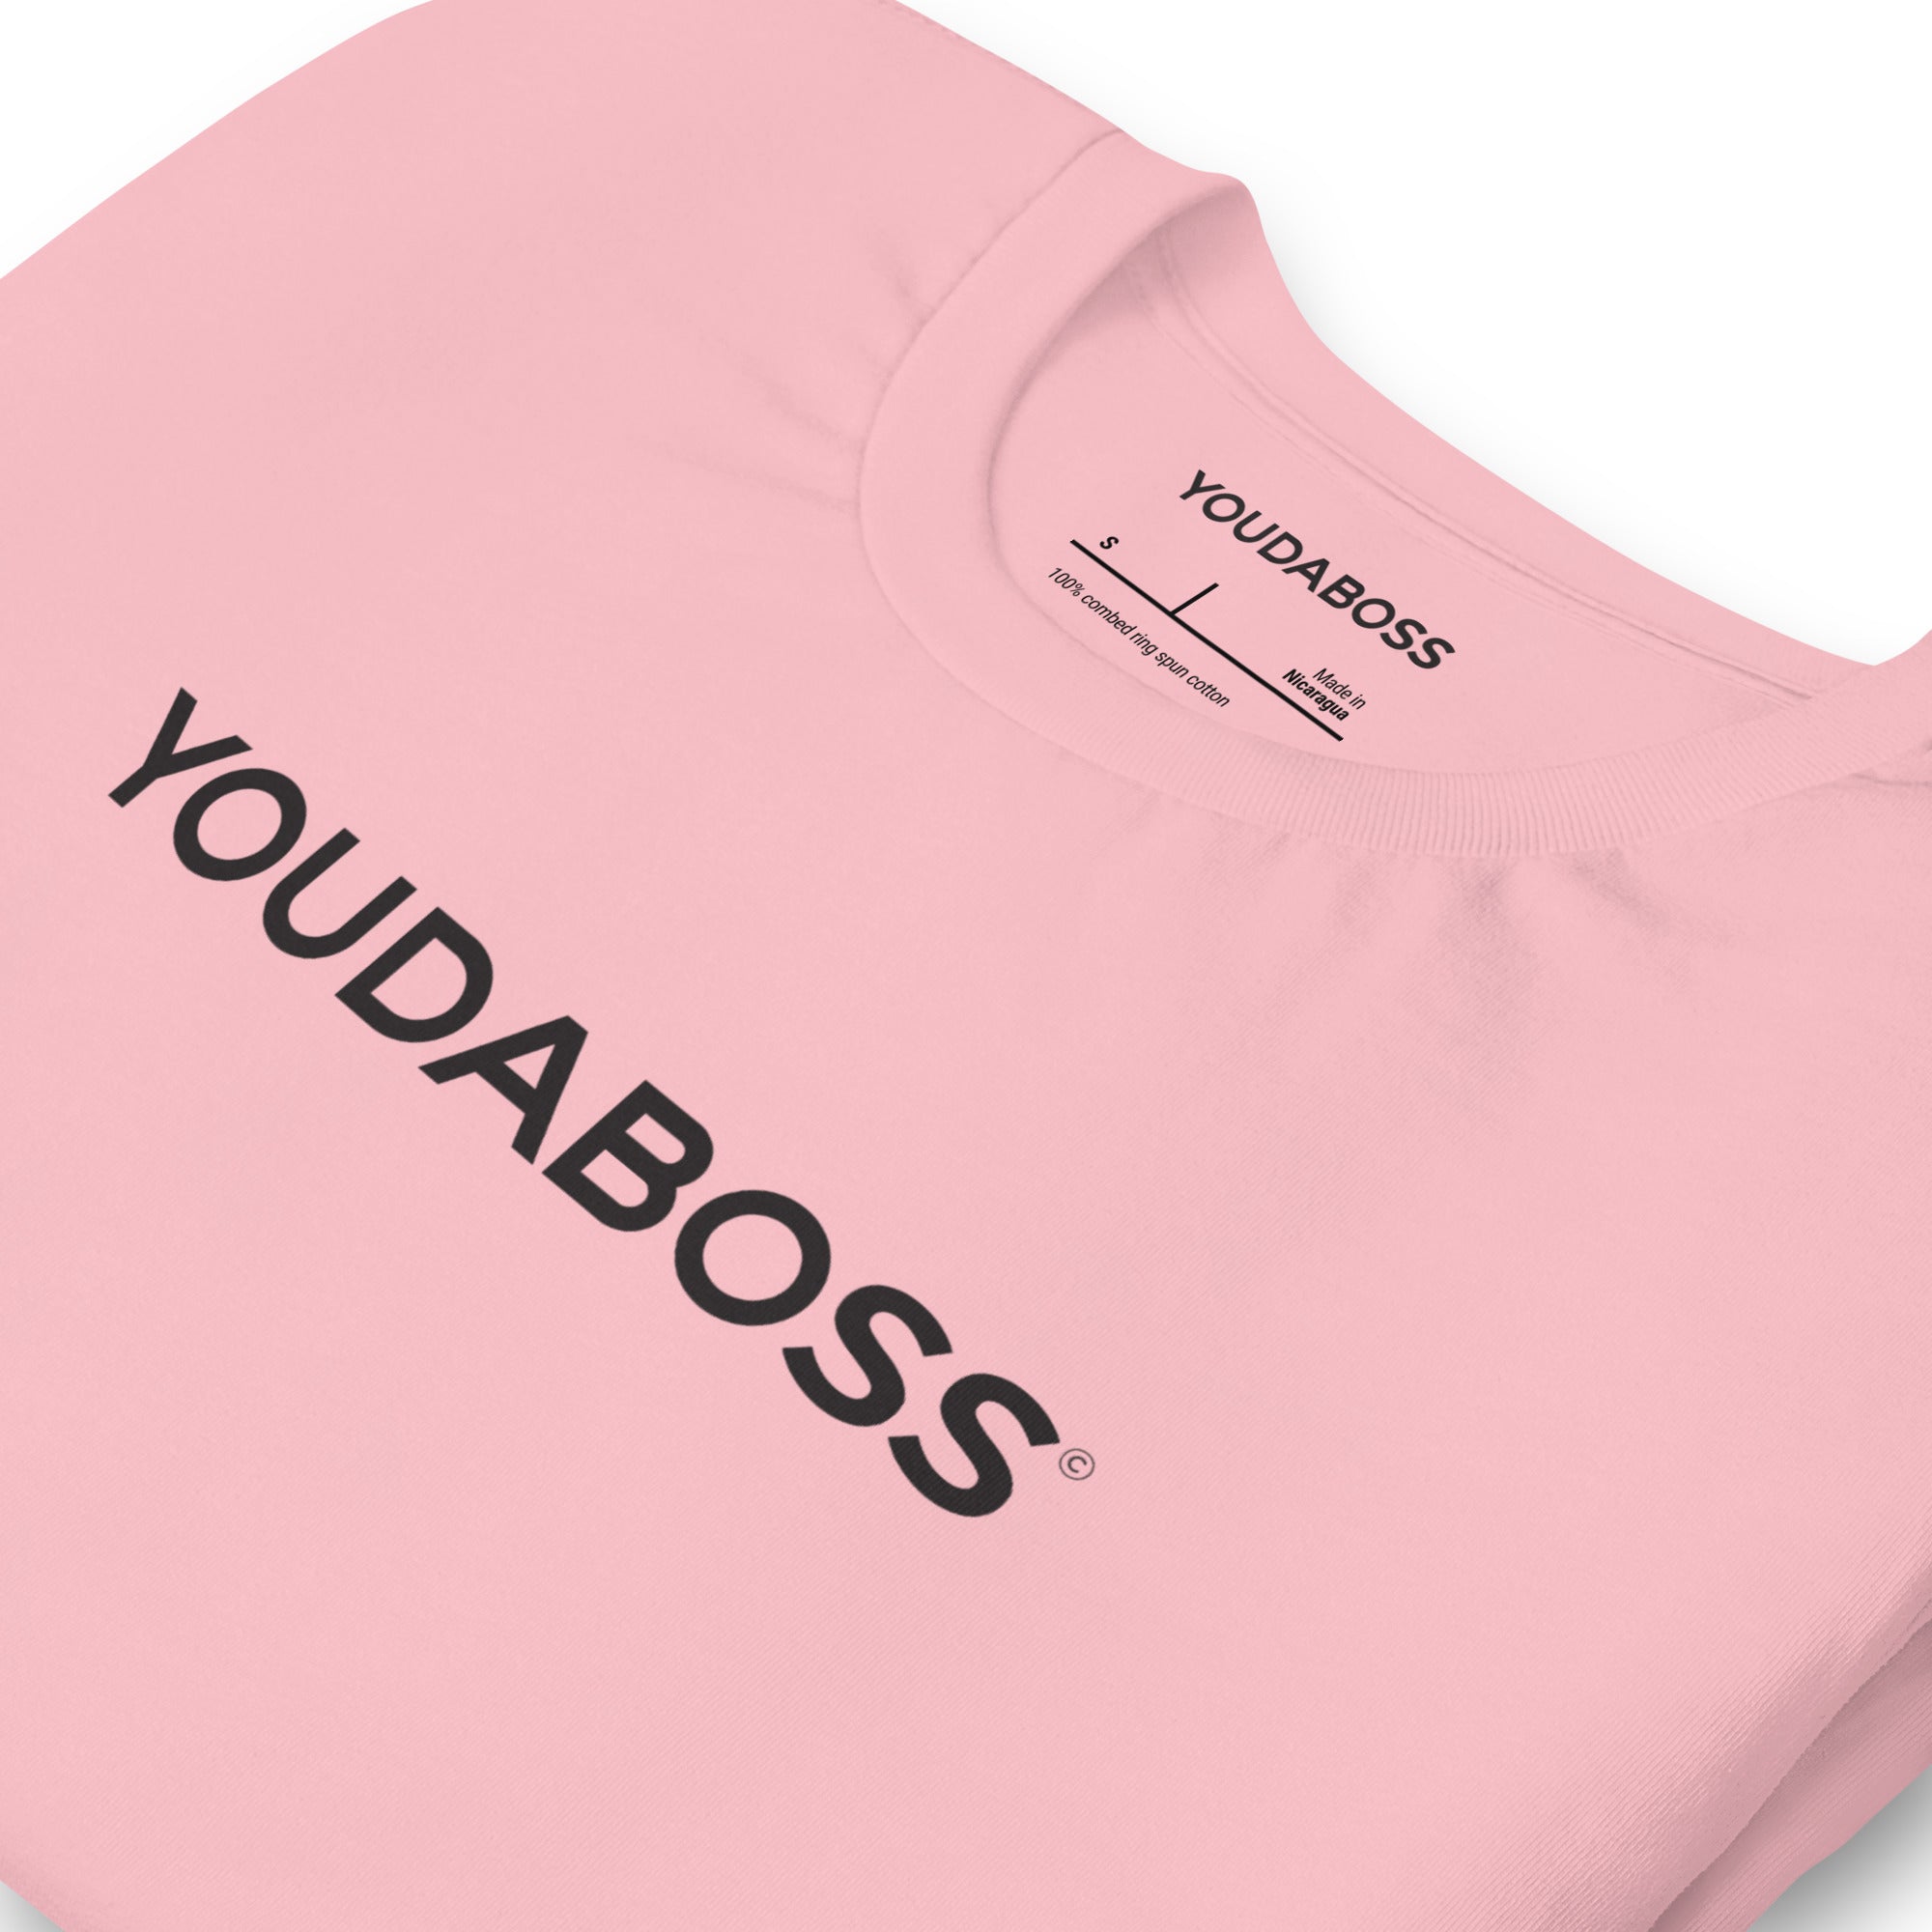 YOUDABOSS Black Print – Unisex t-shirt